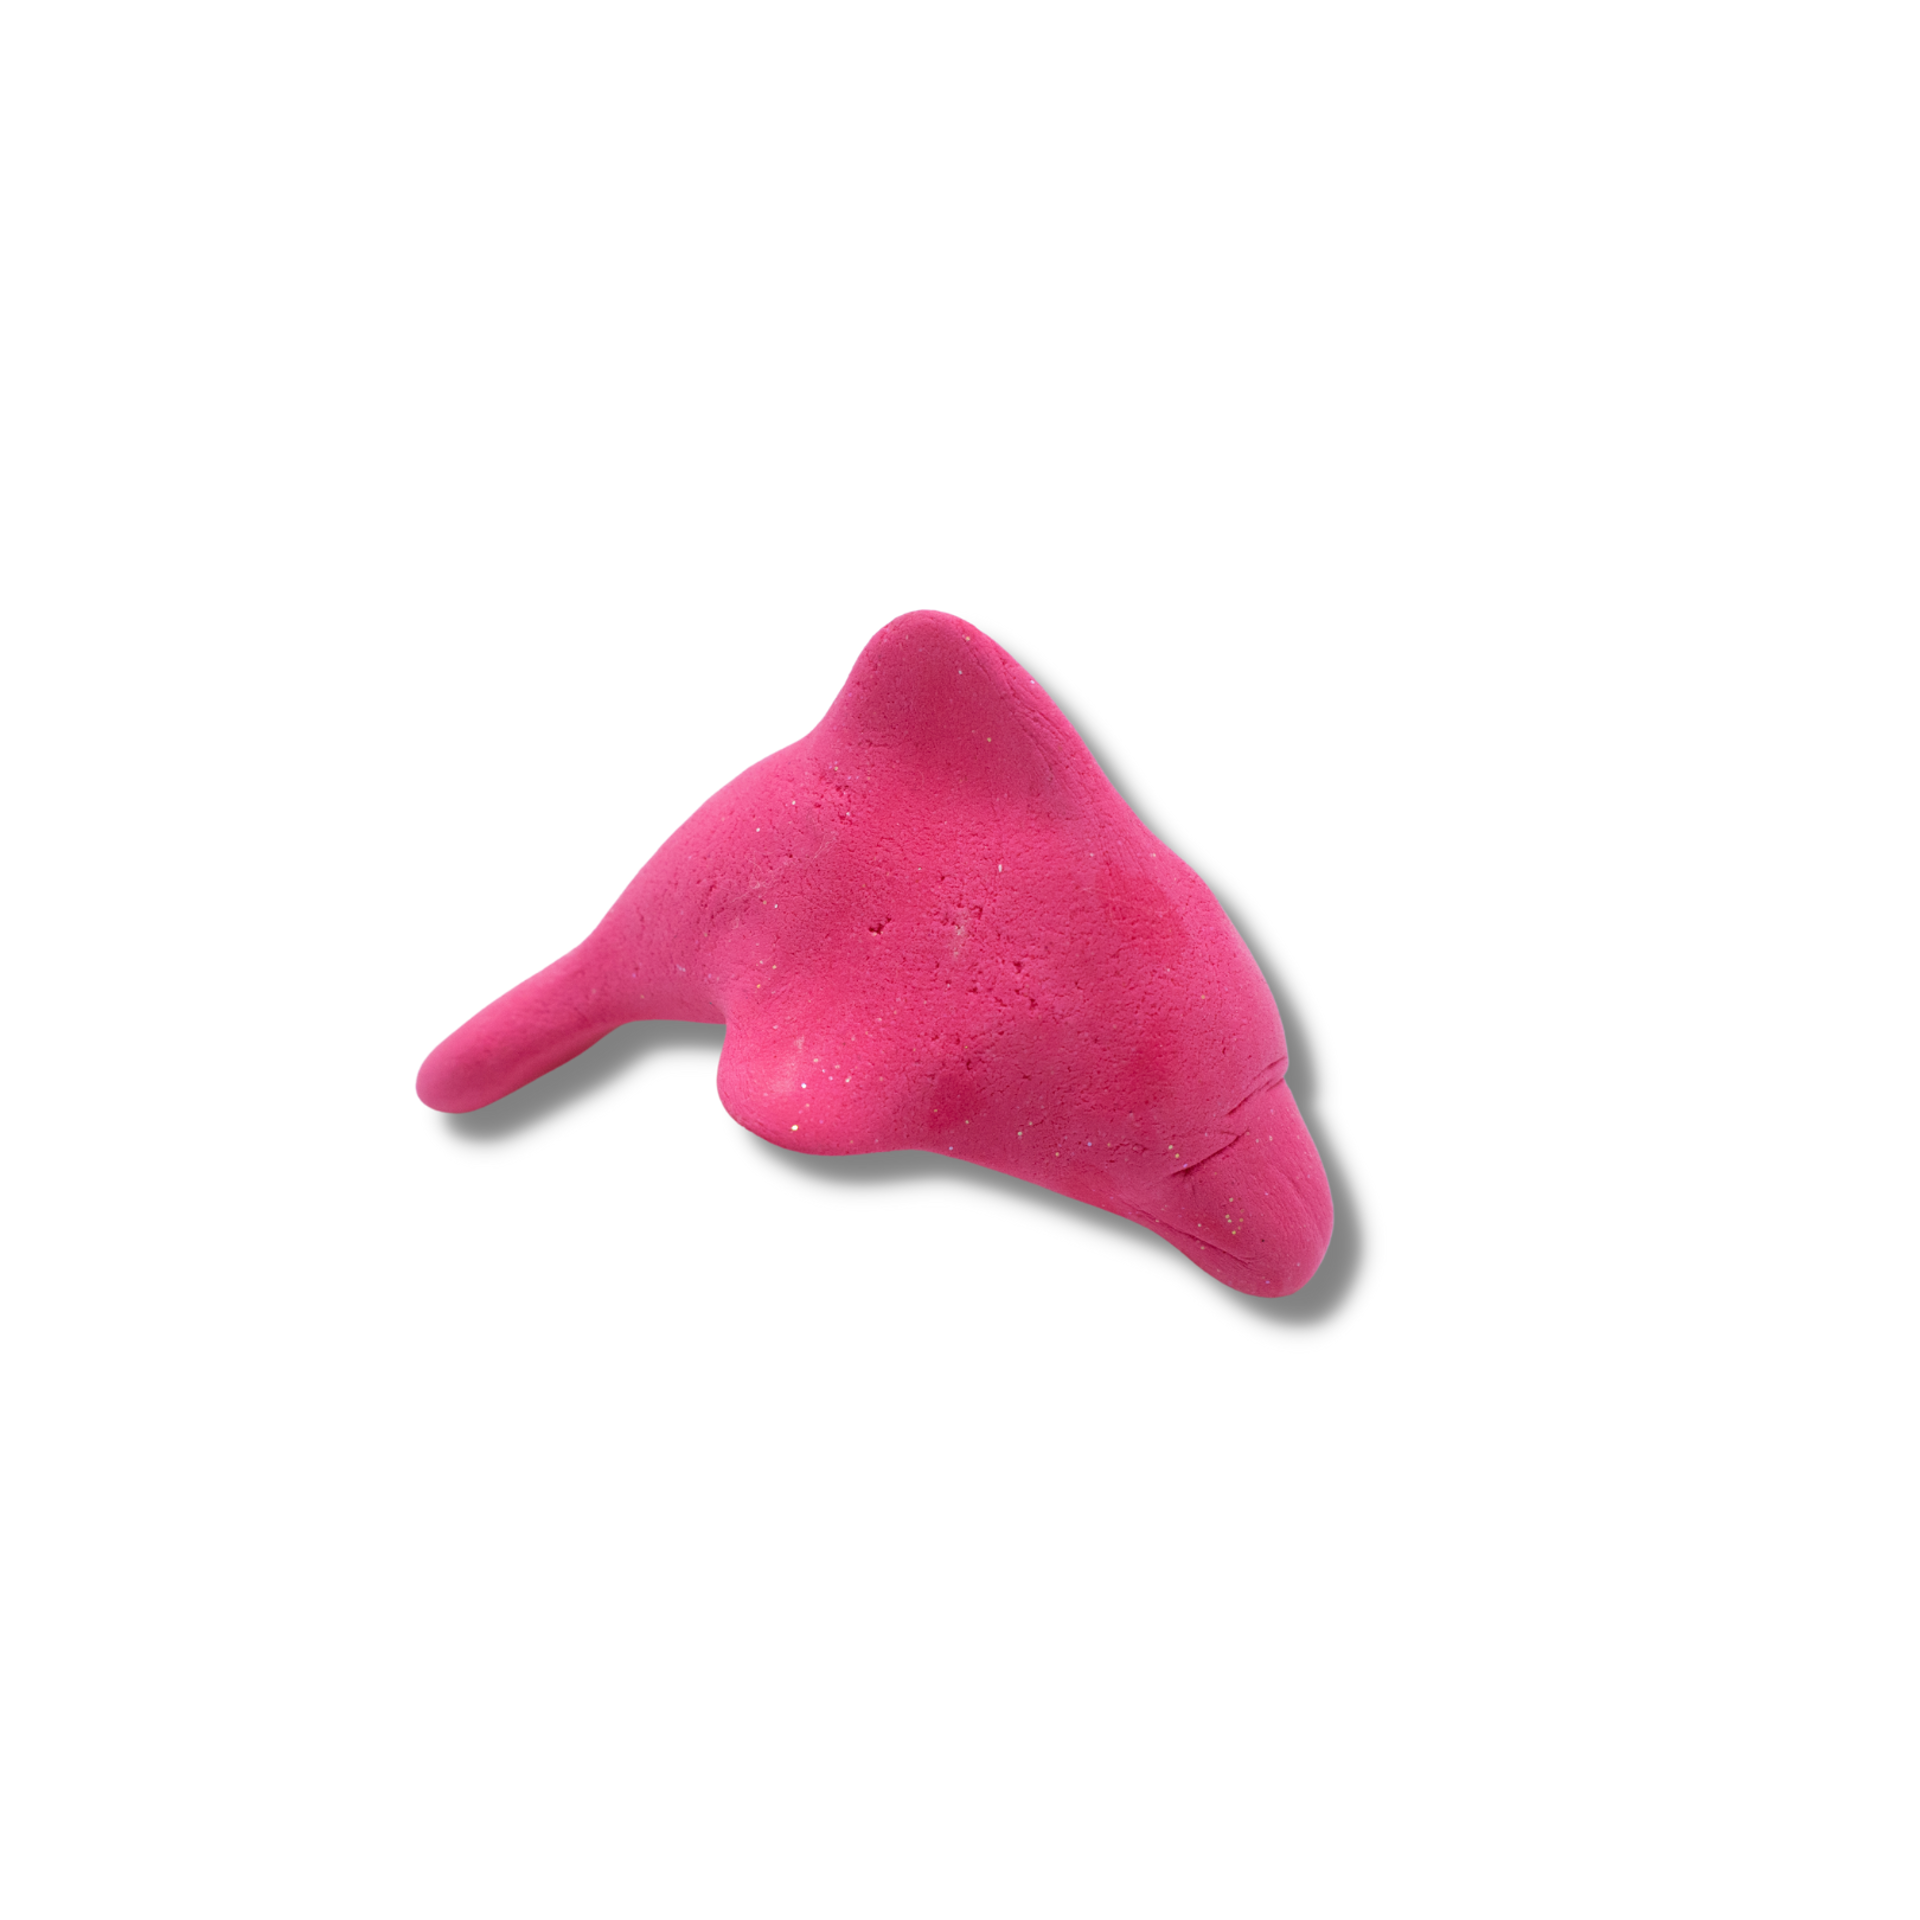 Dolphin Pretty in Pink by Kris Fox